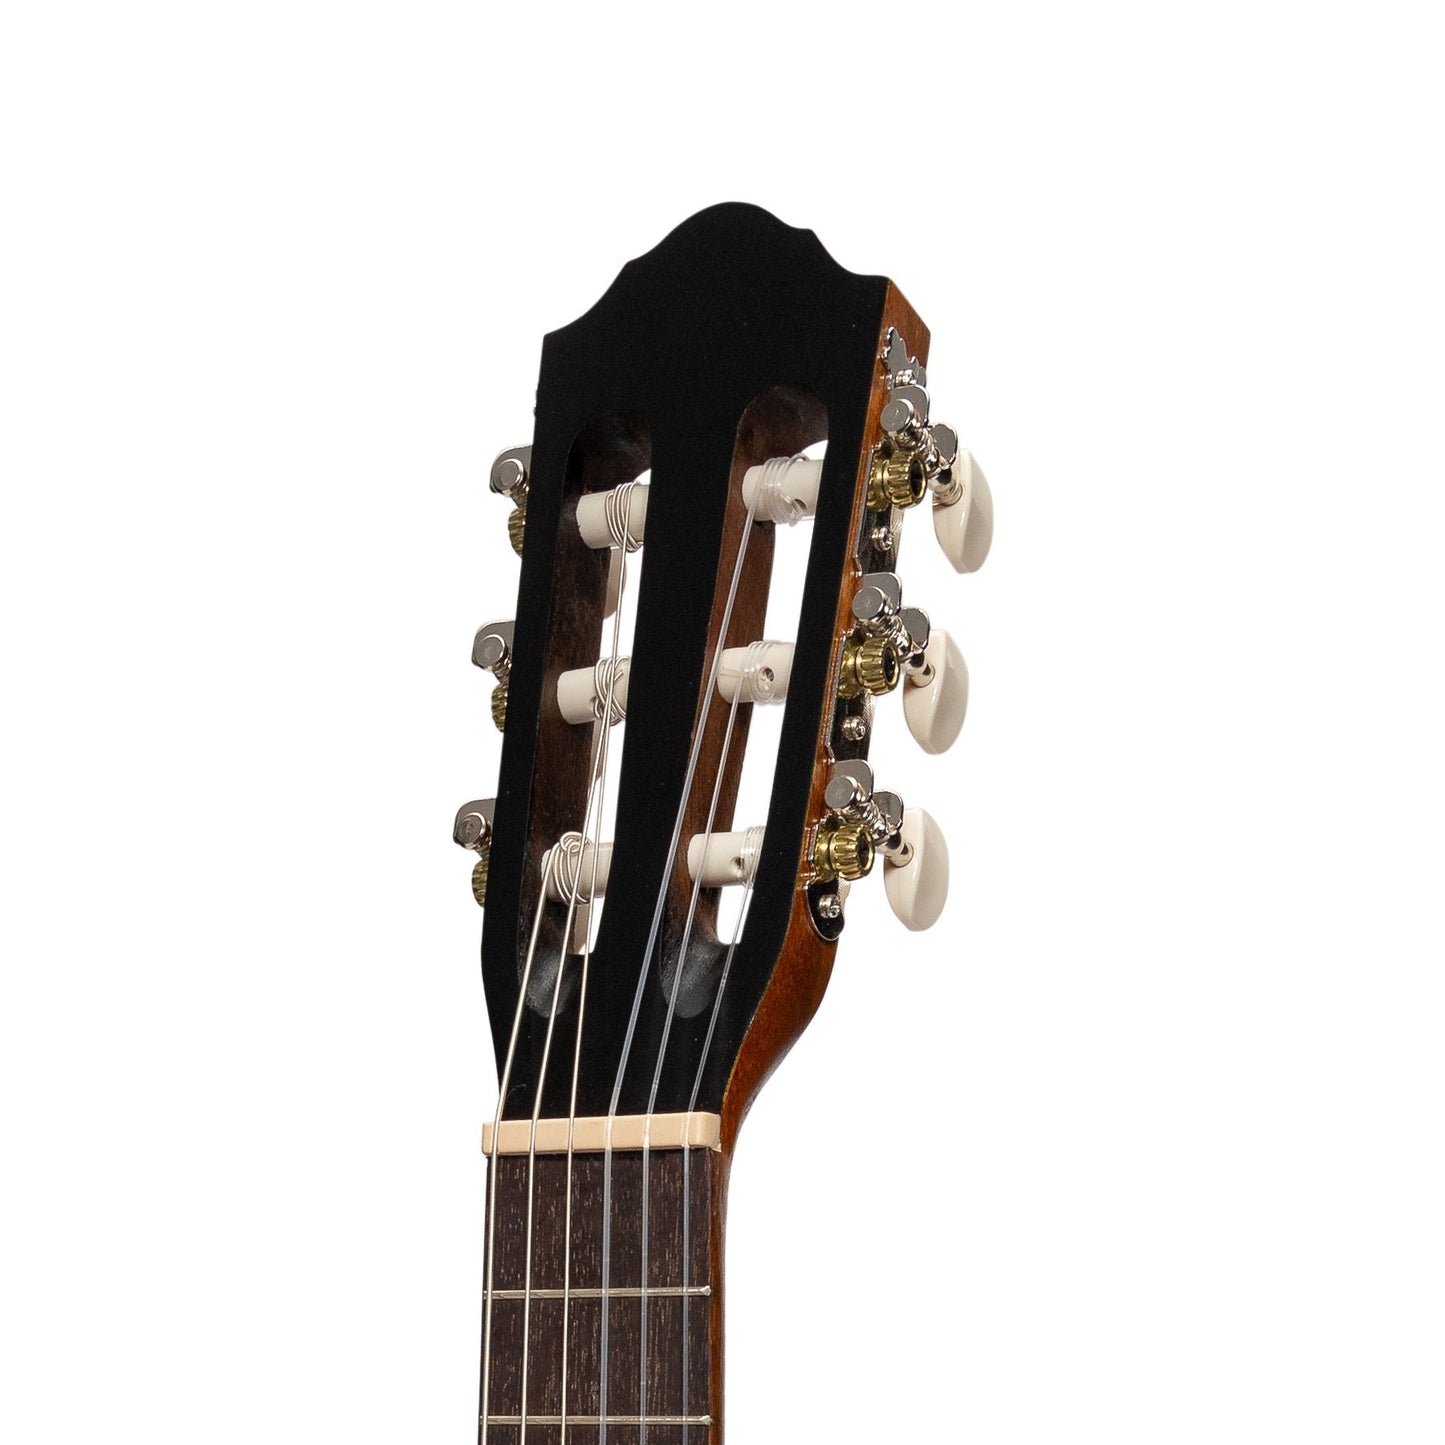 Mojo 'Guitarulele' 1/4 Size Classical Guitar (Koa)